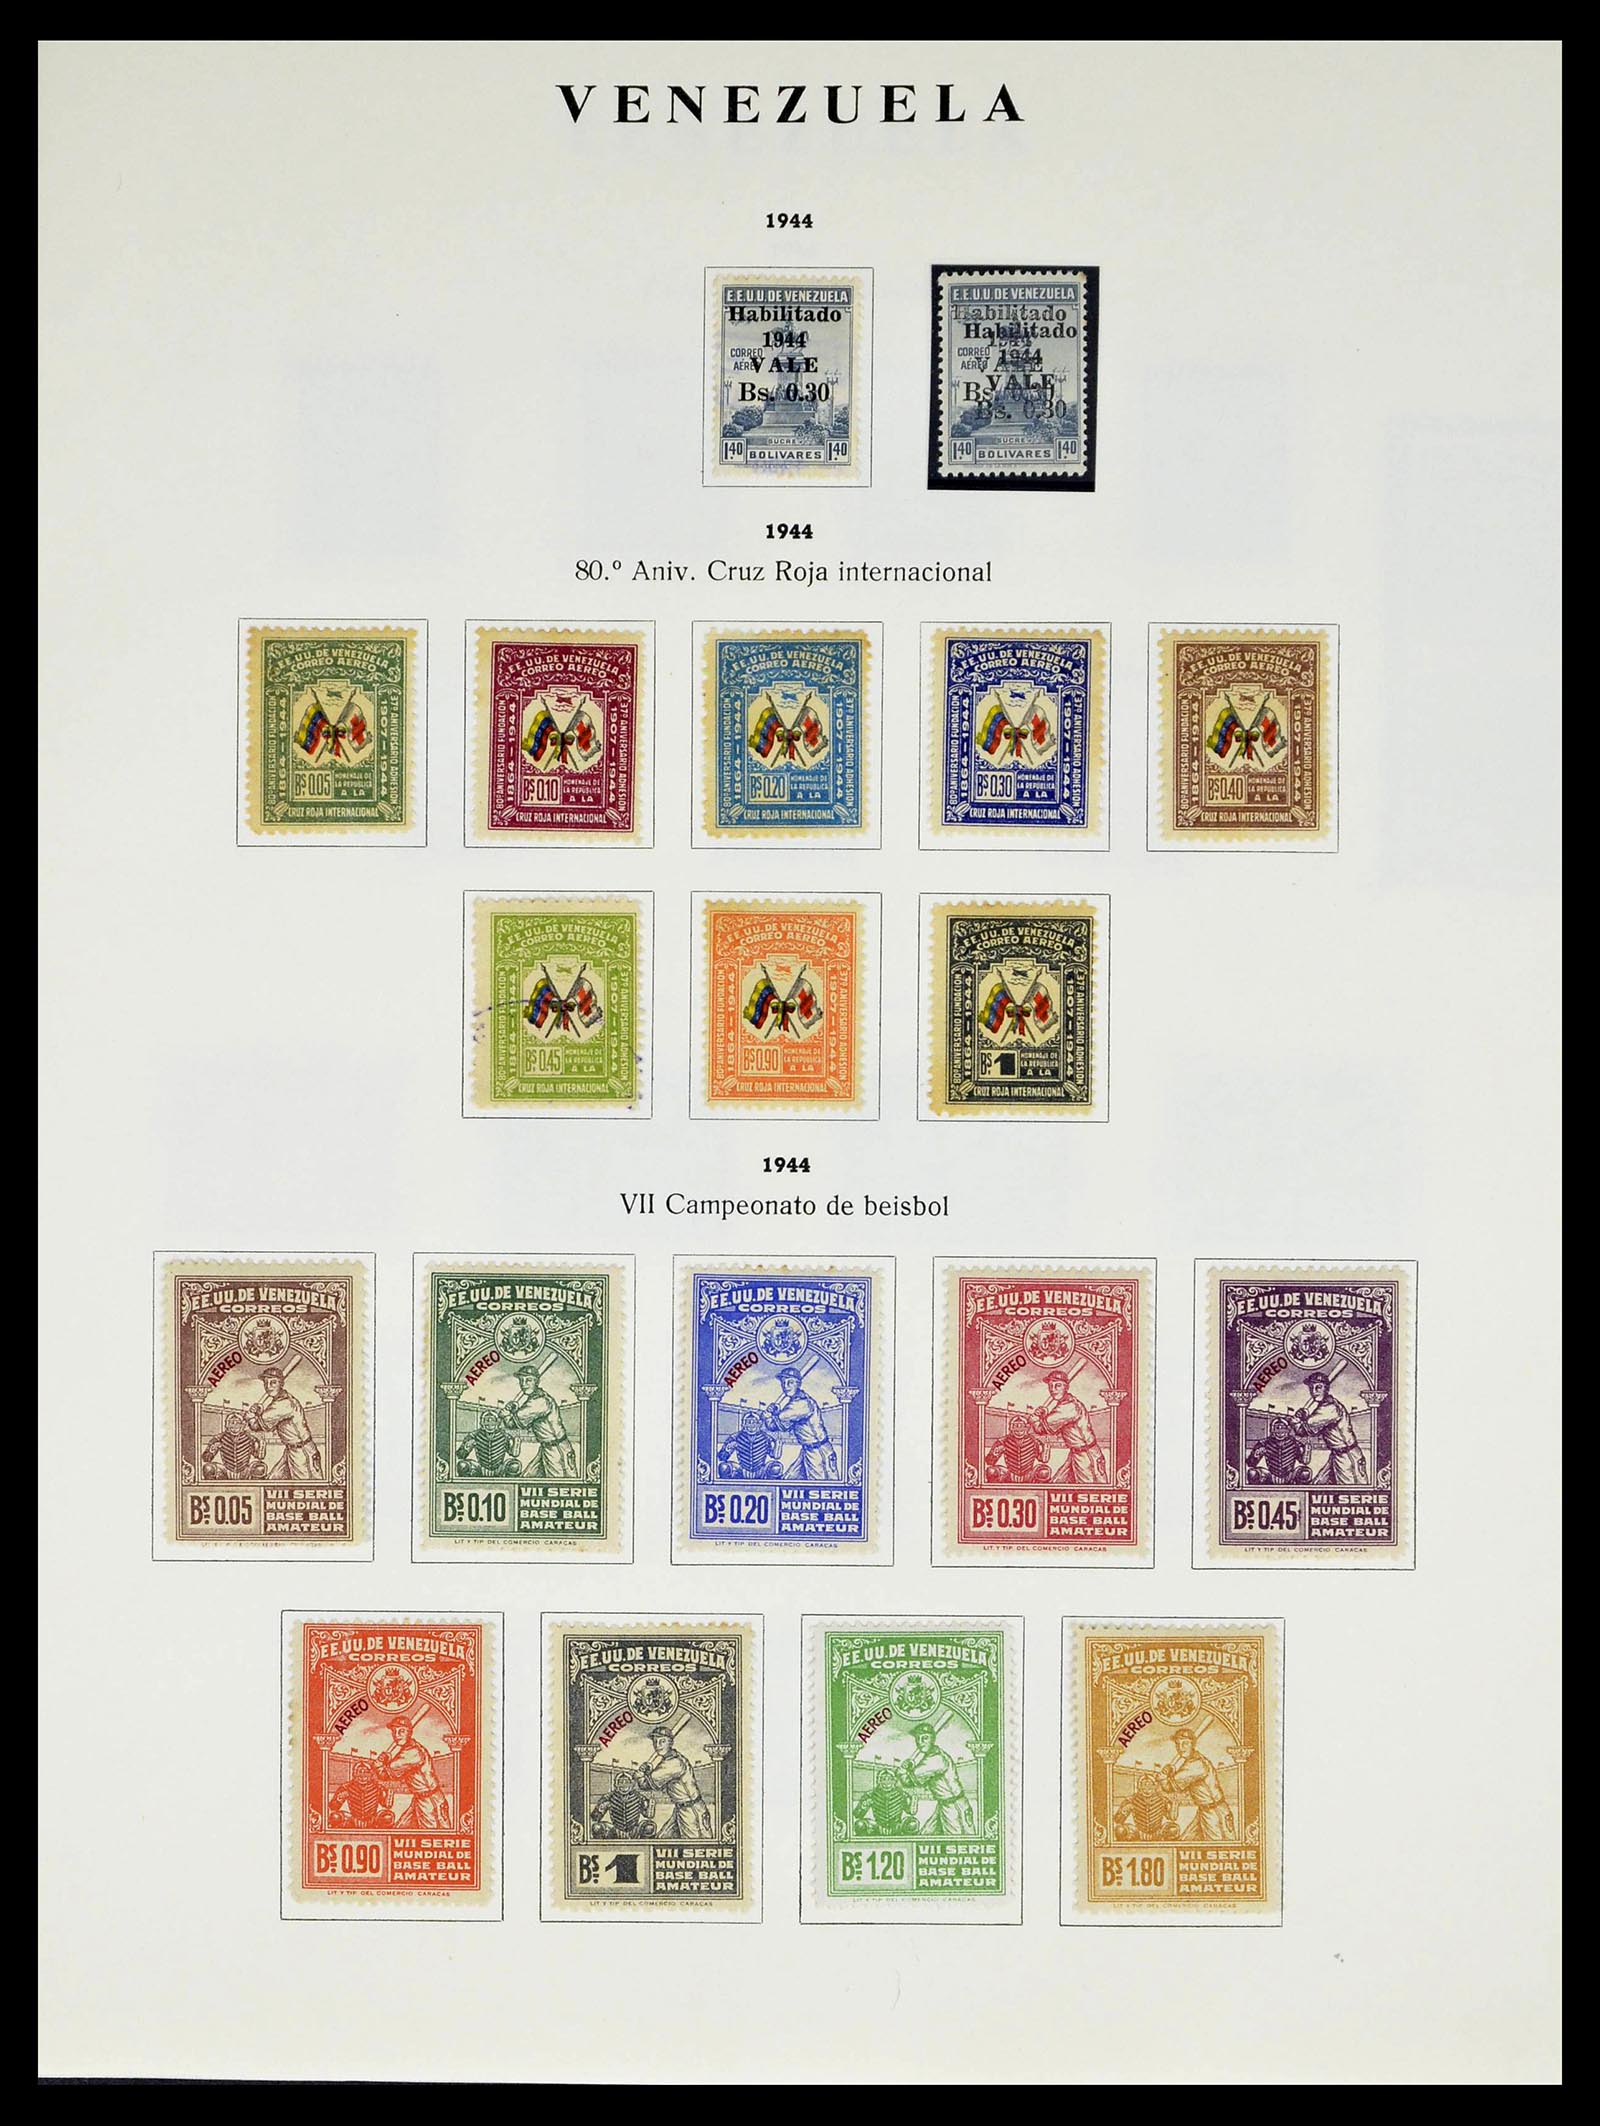 39223 0100 - Stamp collection 39223 Venezuela 1859-1984.